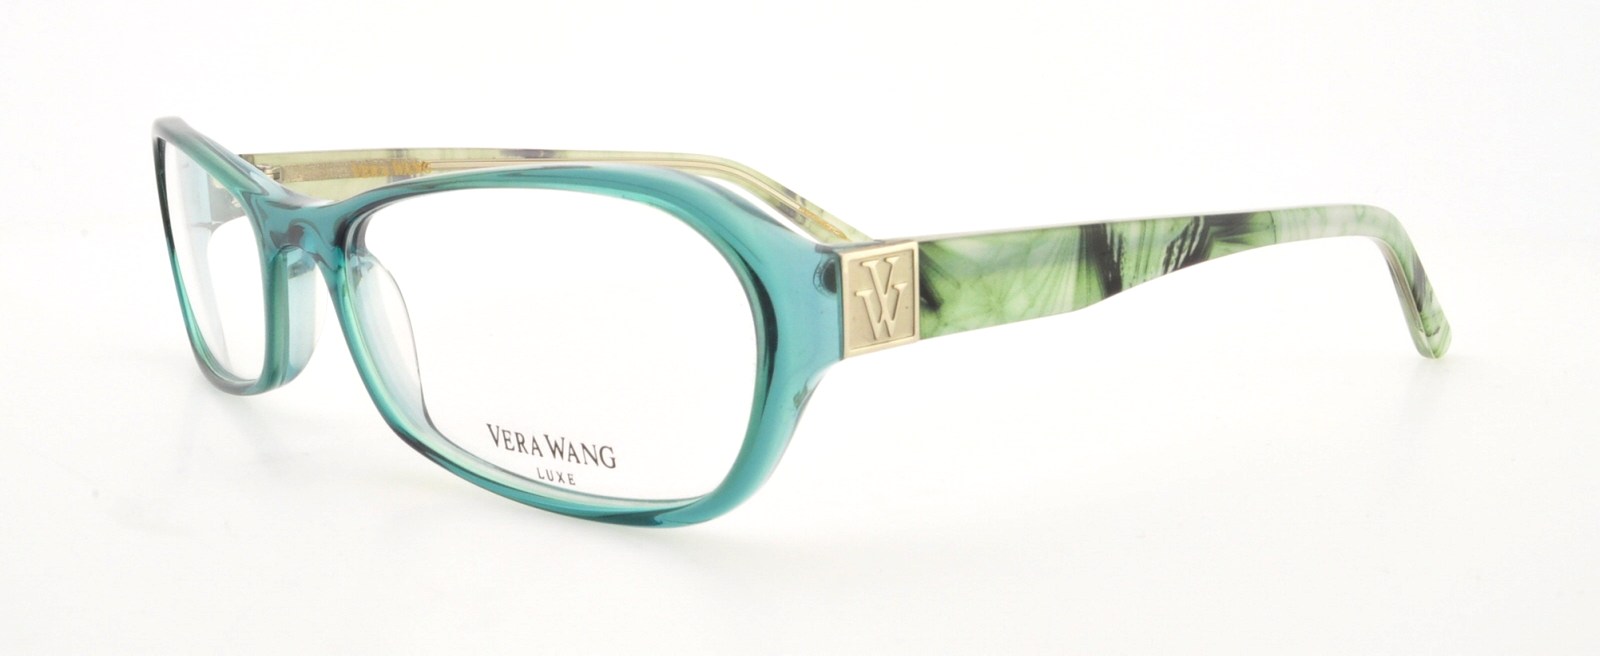 Picture of Vera Wang Eyeglasses V302